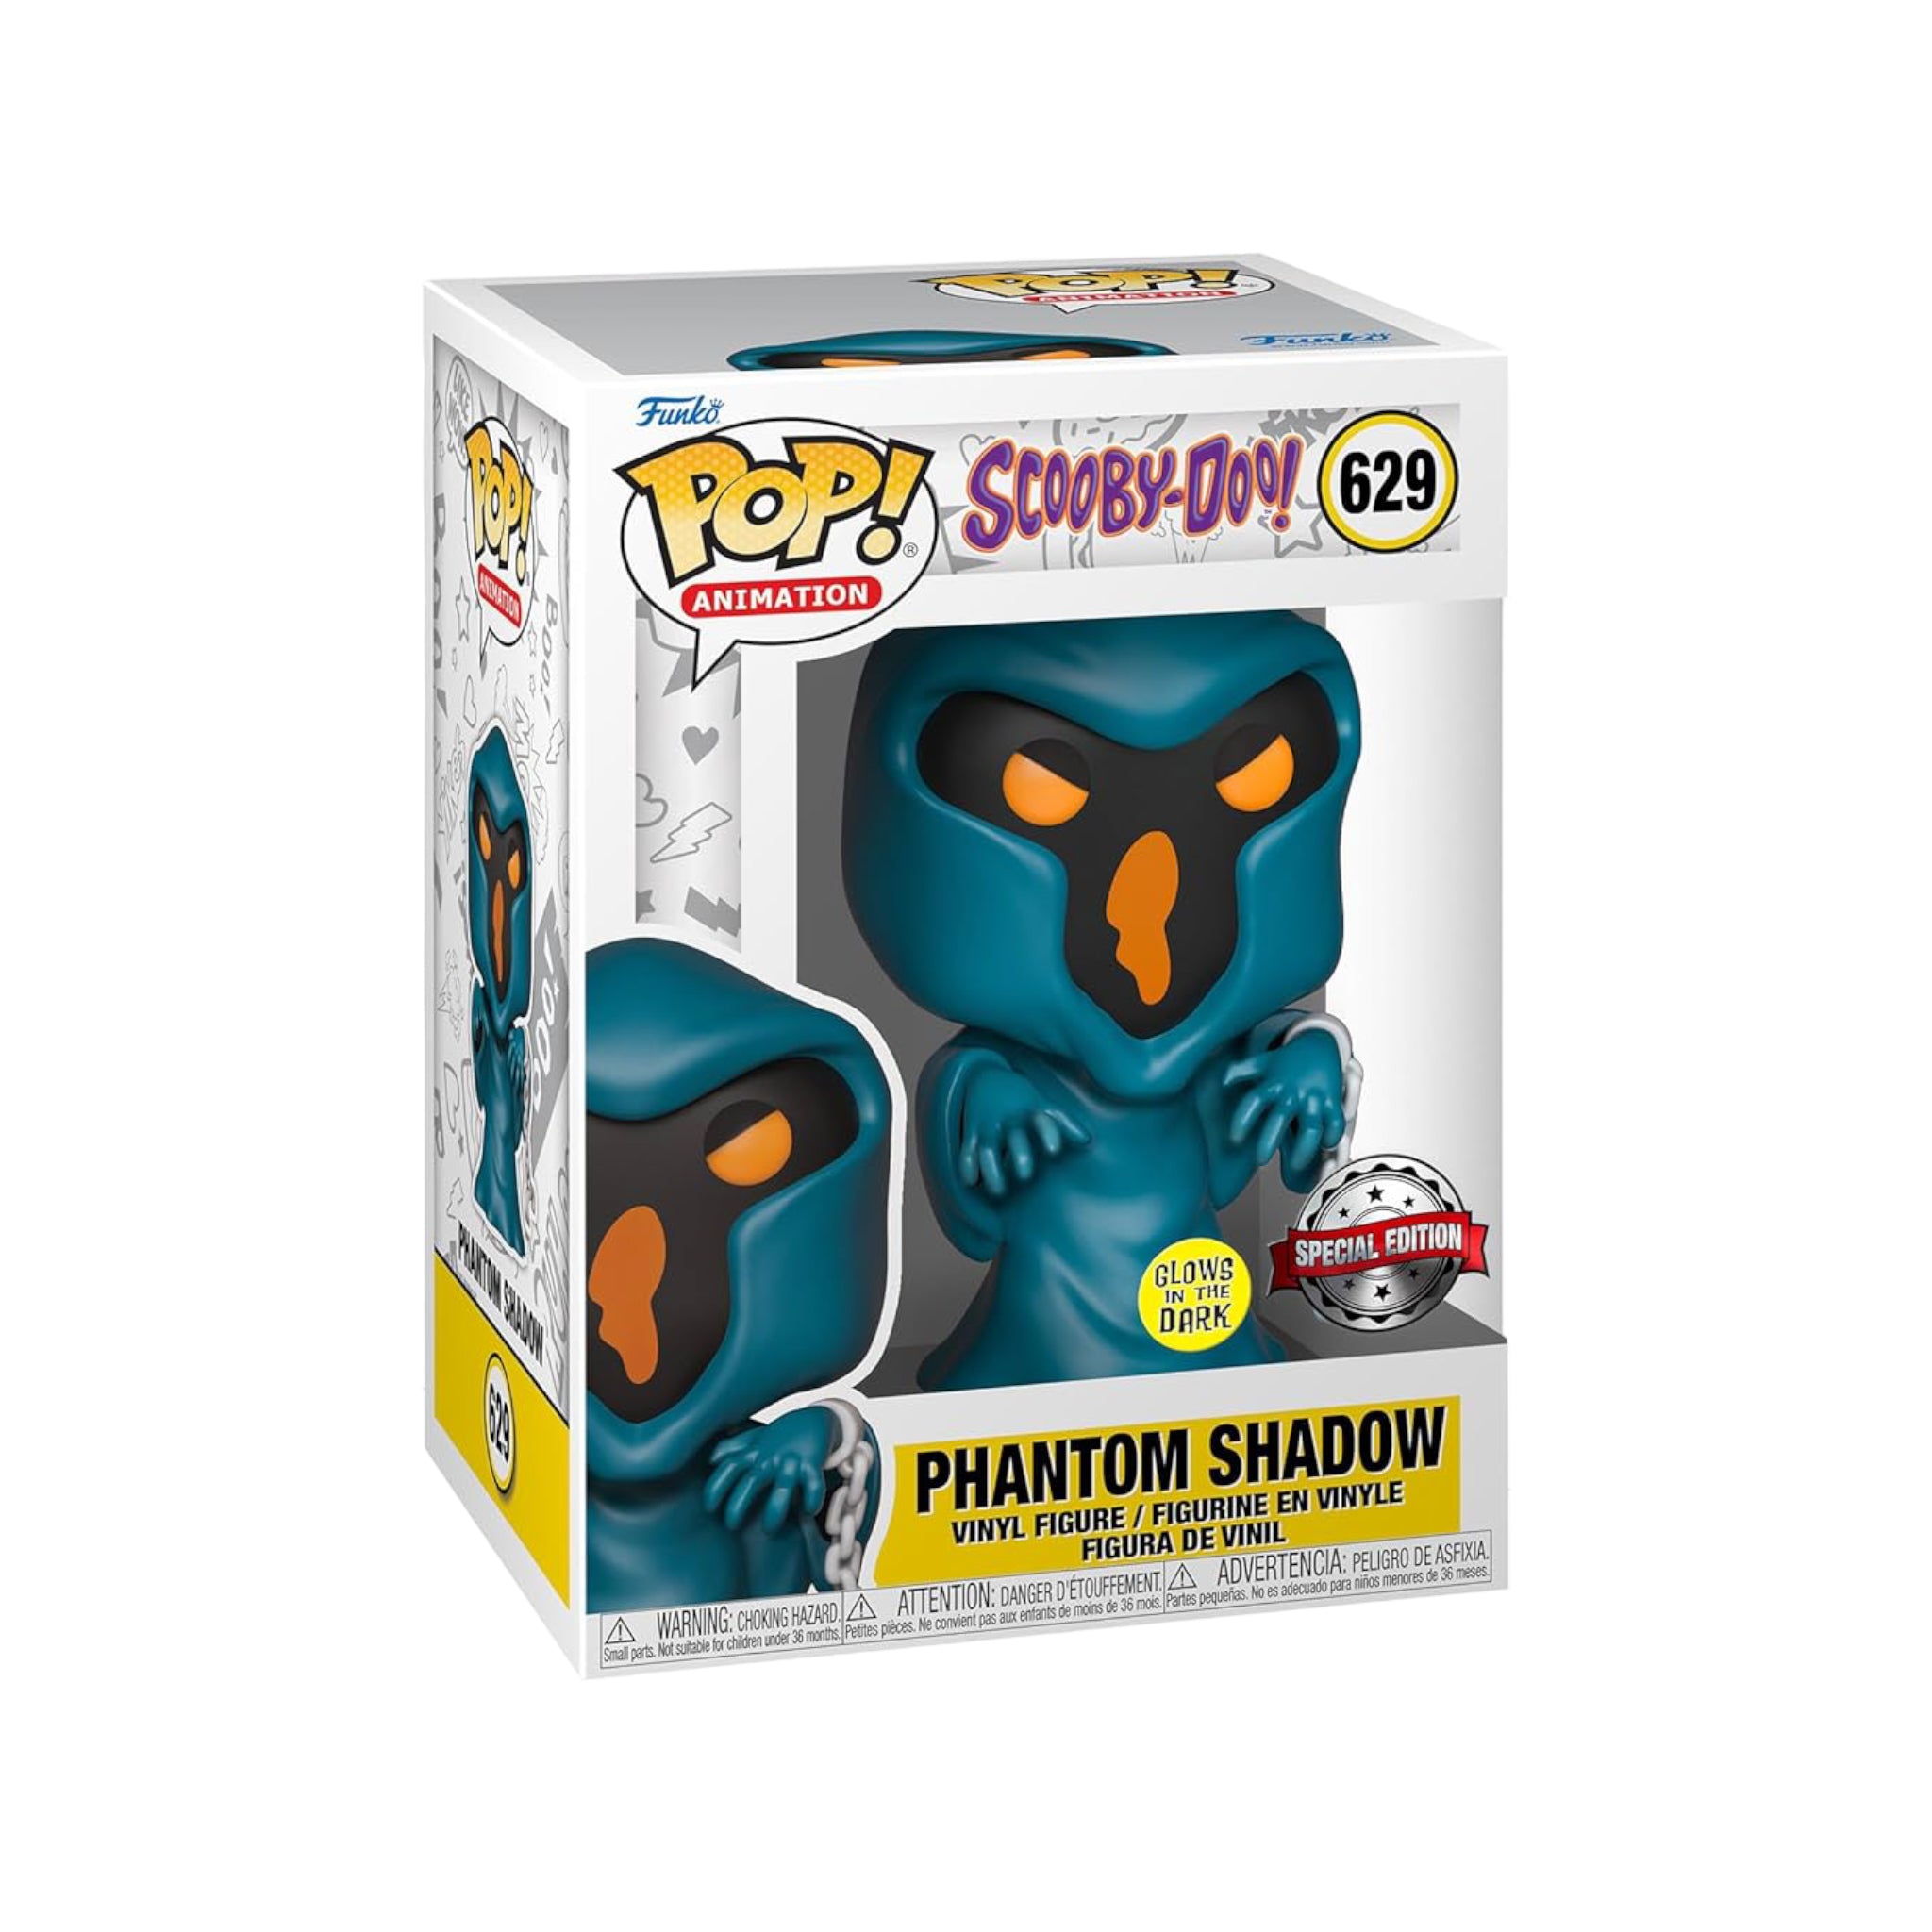 Phantom Shadow #629 (Glows in the Dark) Funko Pop! - Scooby-Doo! - Special Edition